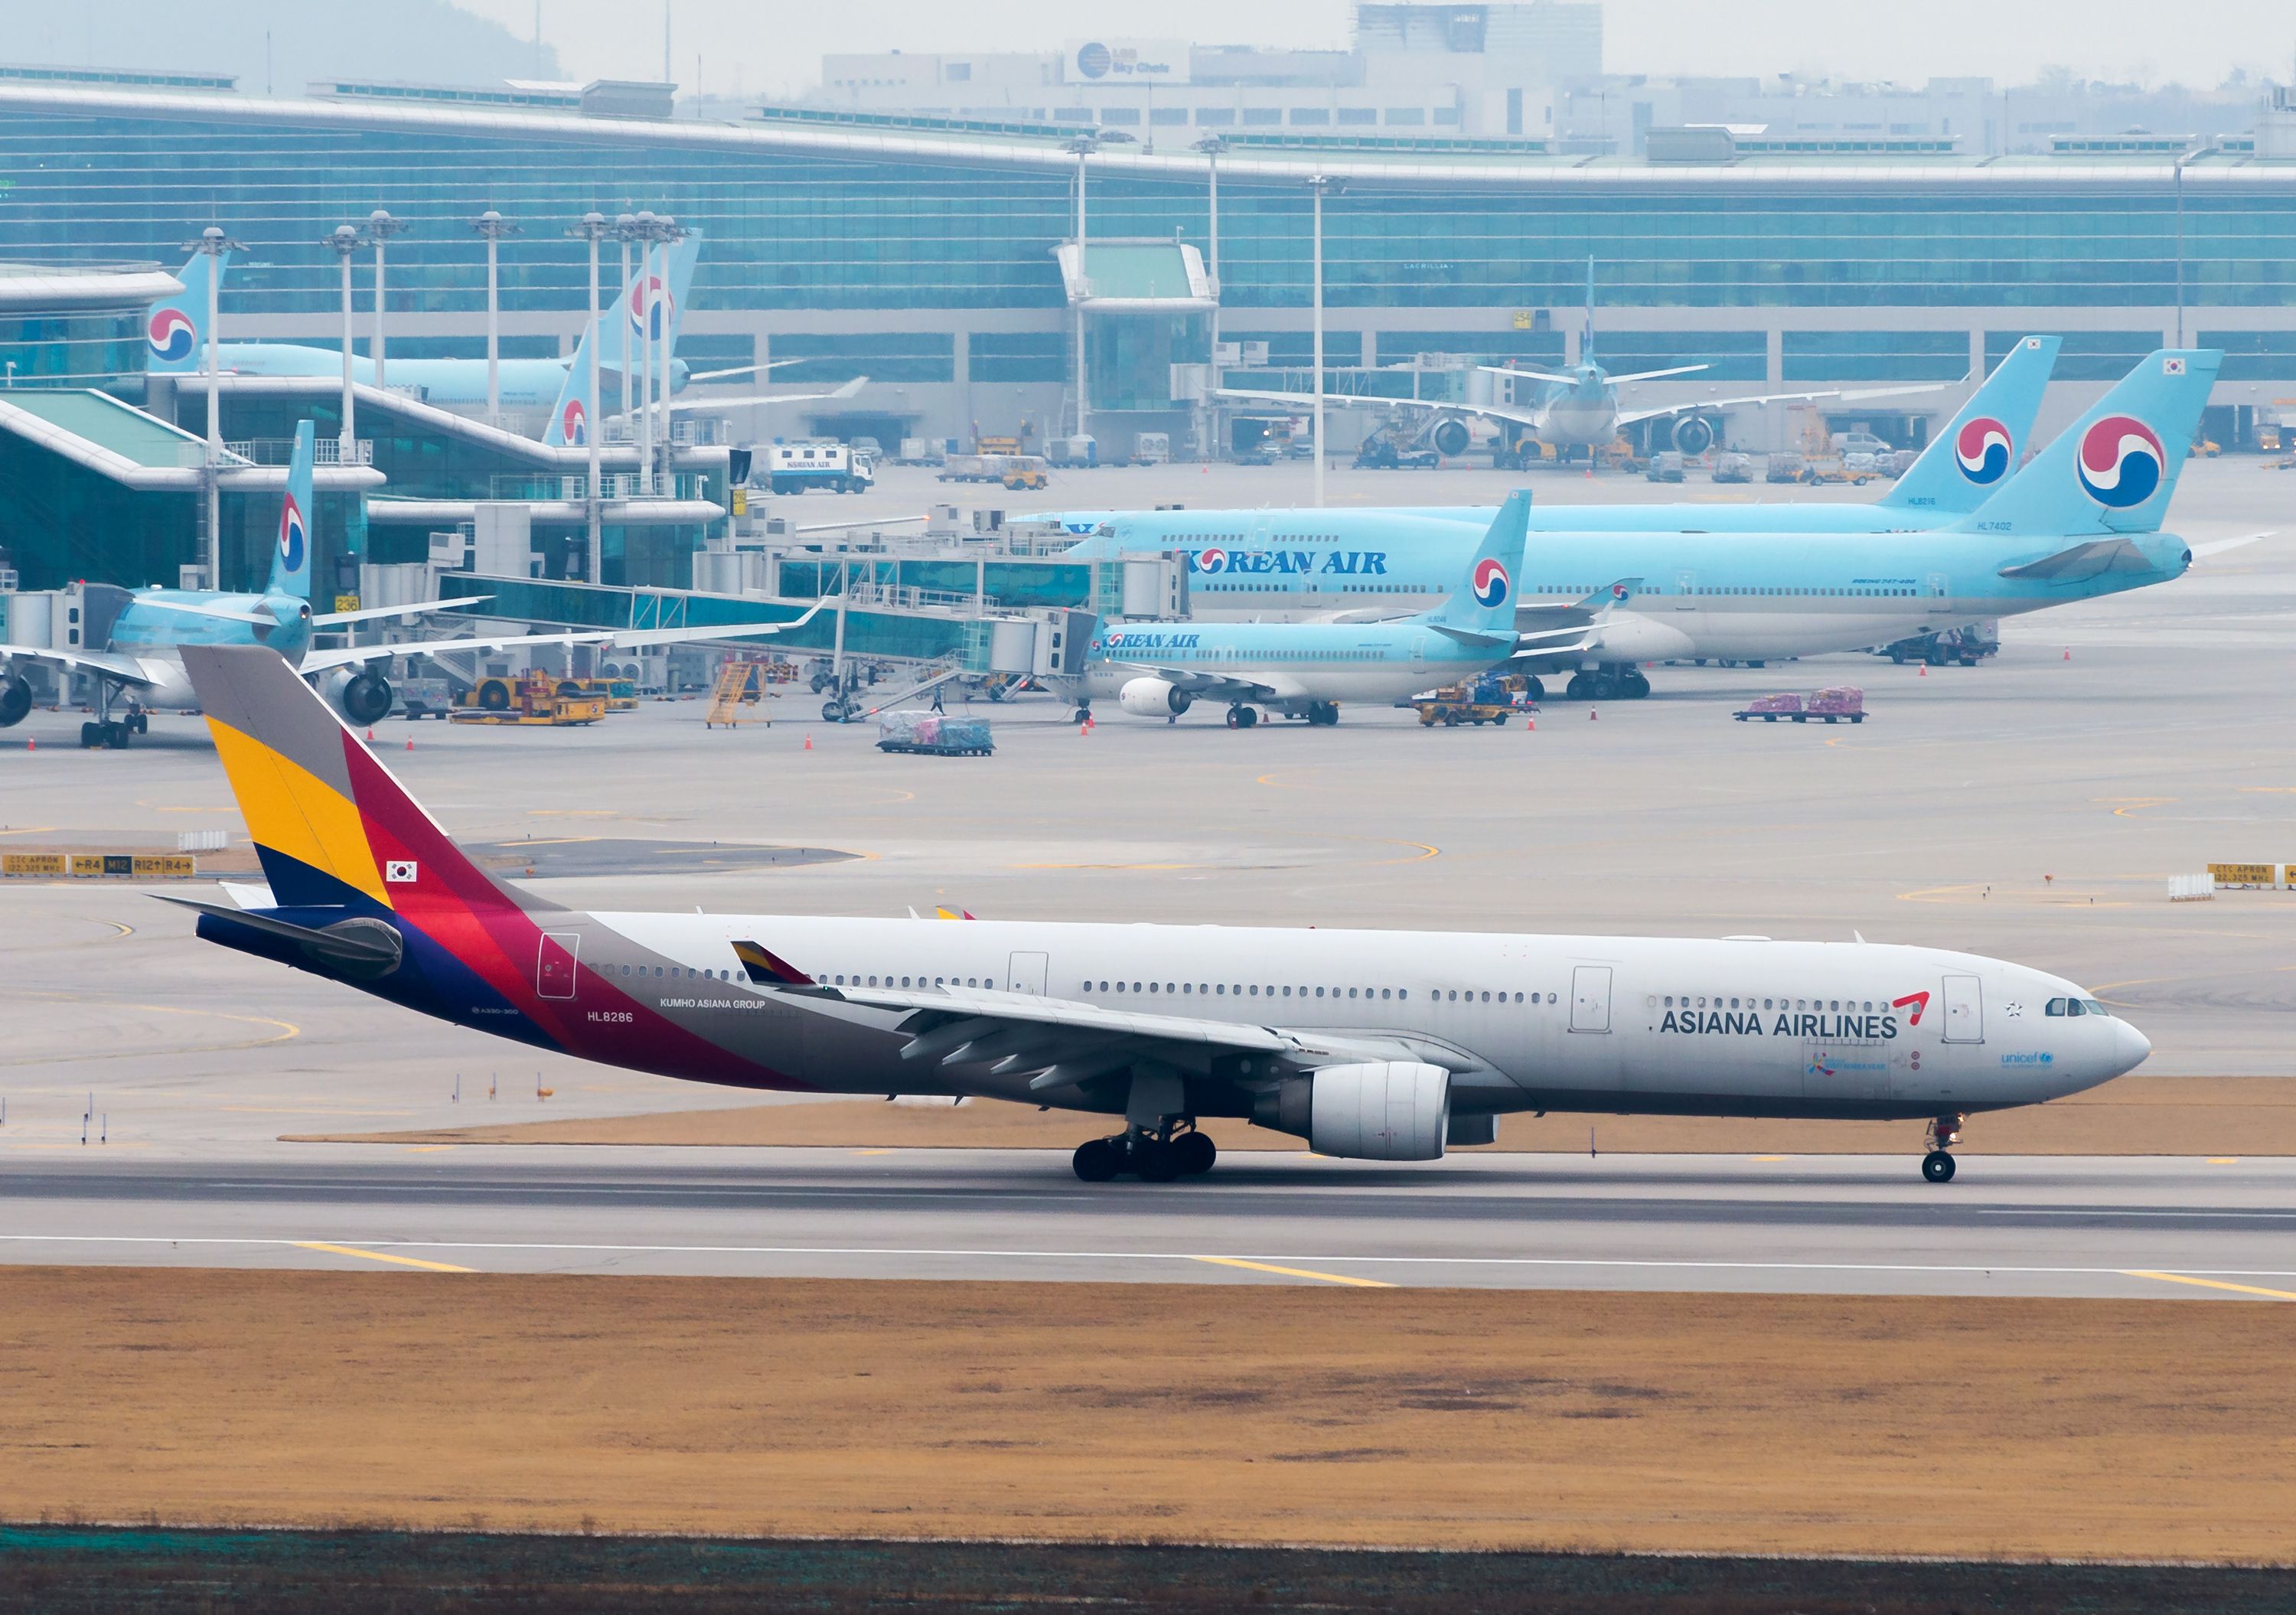 Korean Air And Asiana Airlines aircraft at Seoul Incheon airport